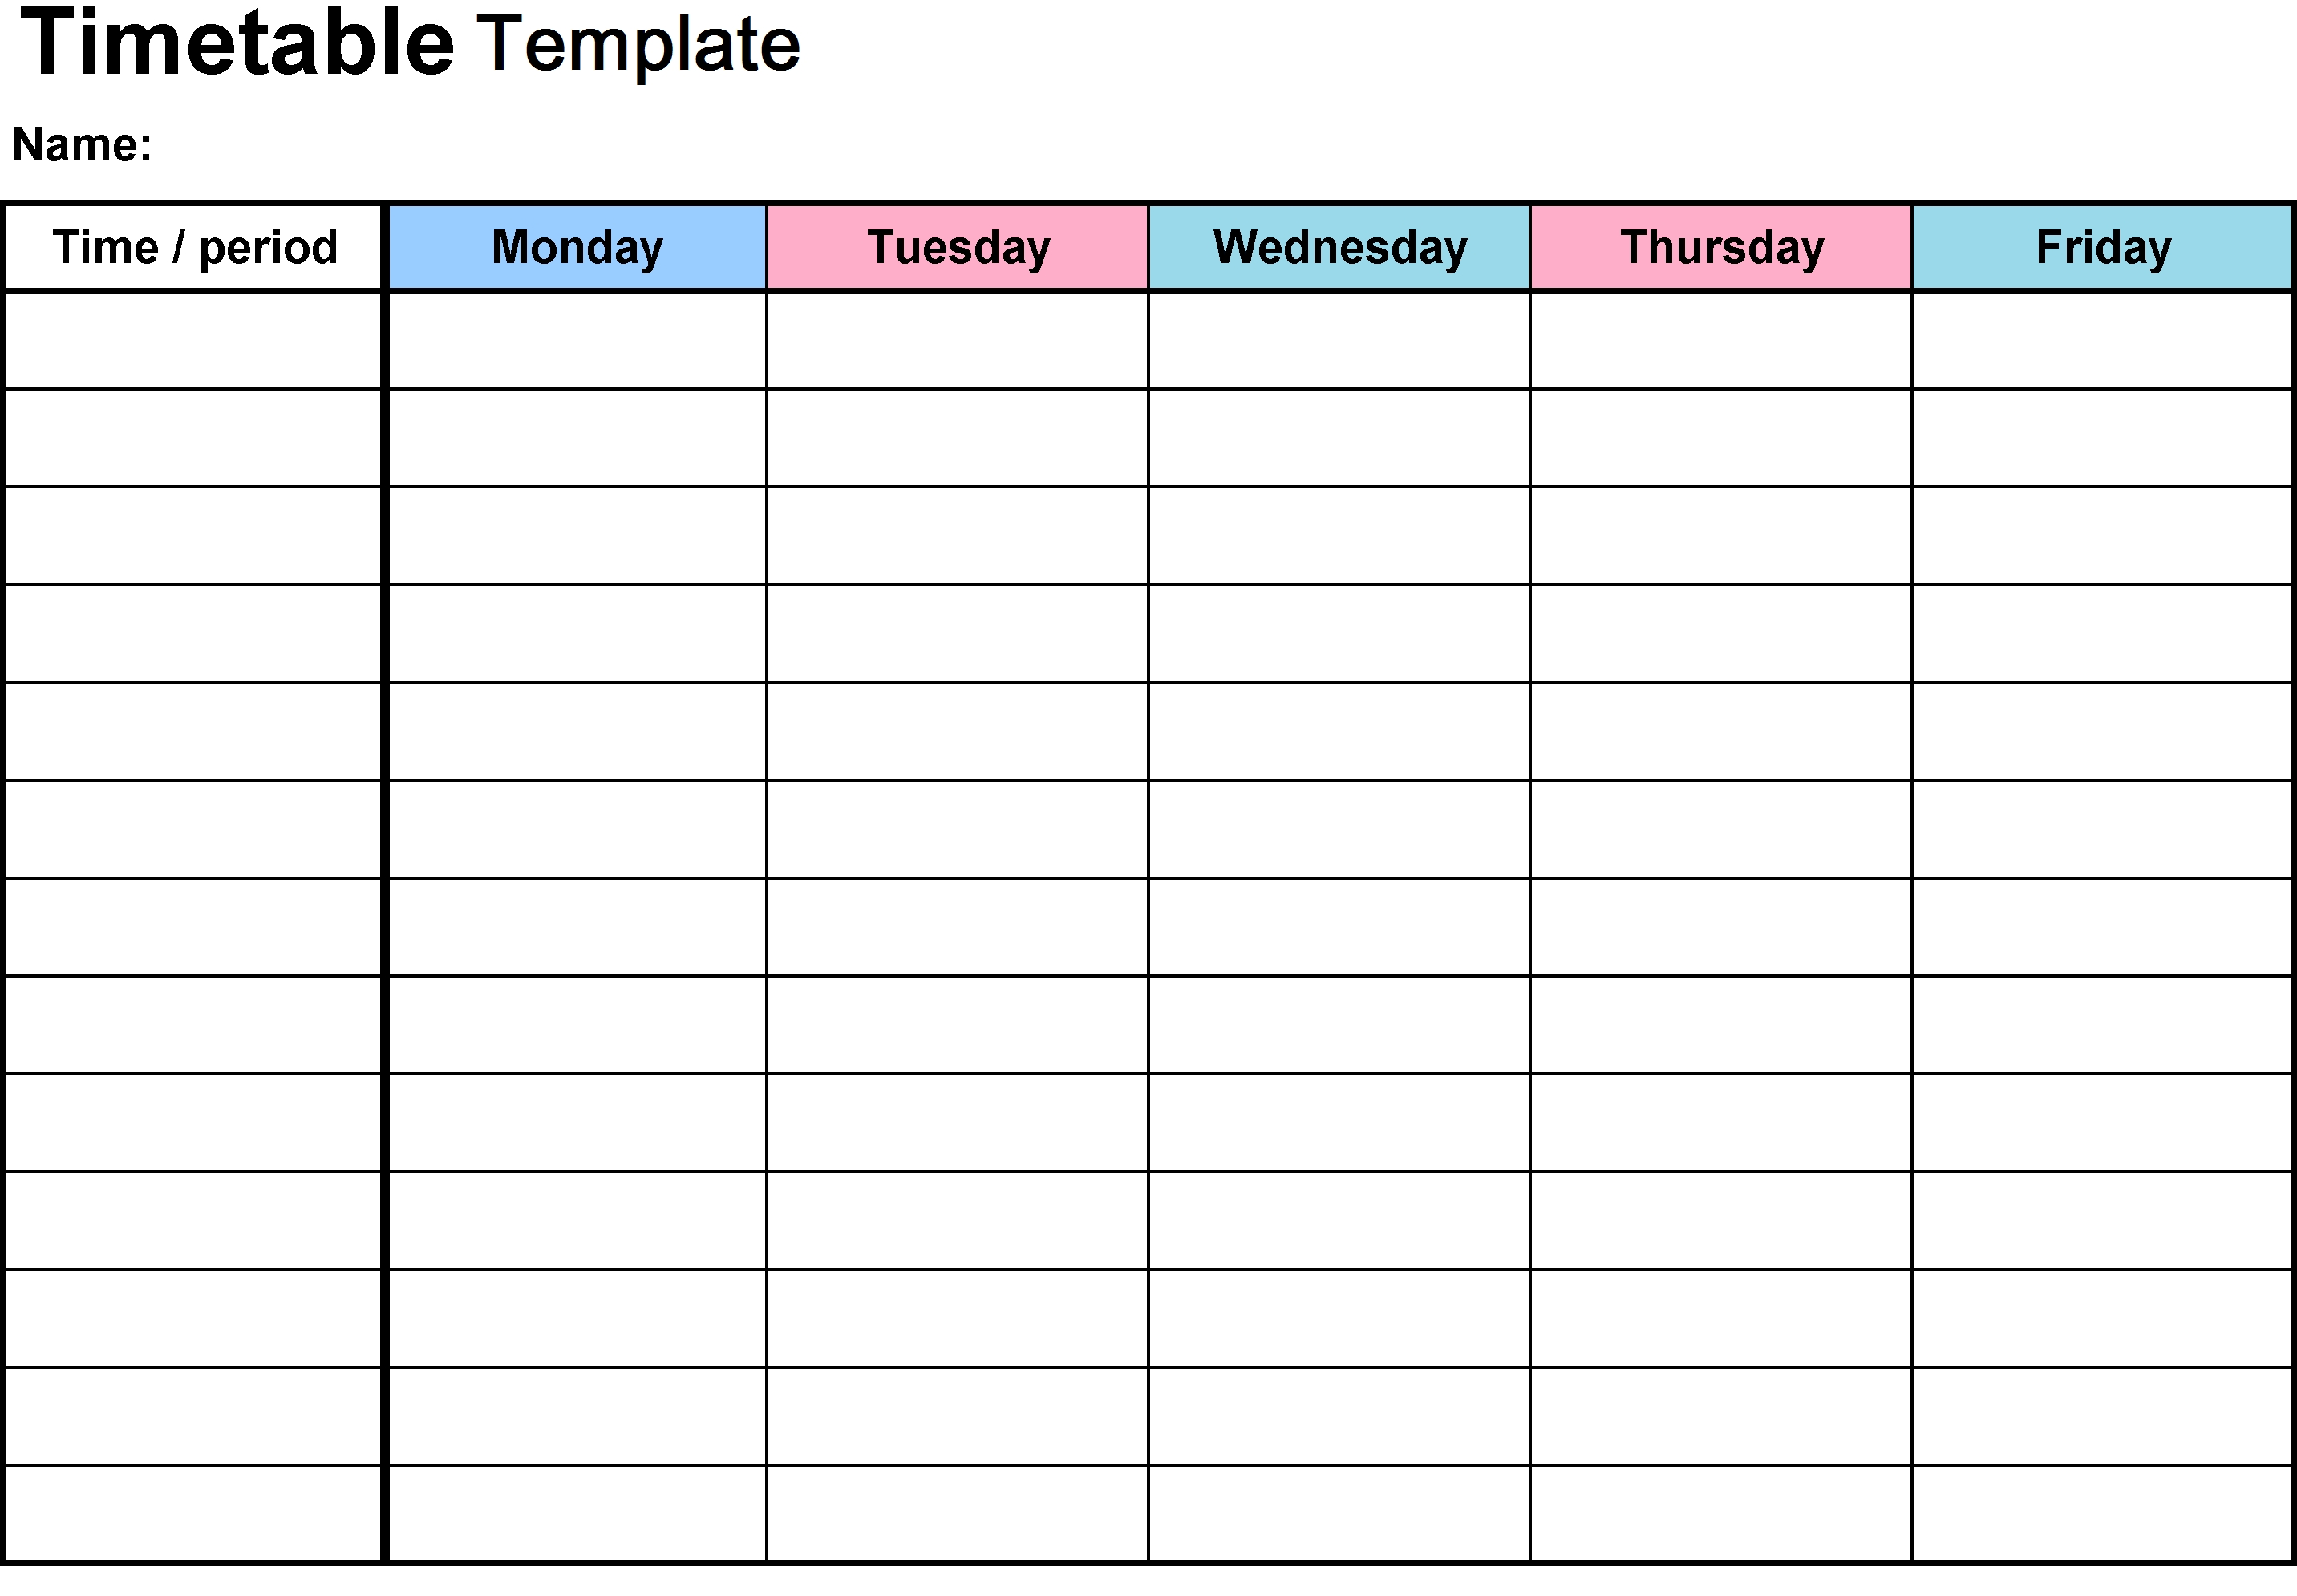 Timetable Template 2018 #collegetimetabletemplateword